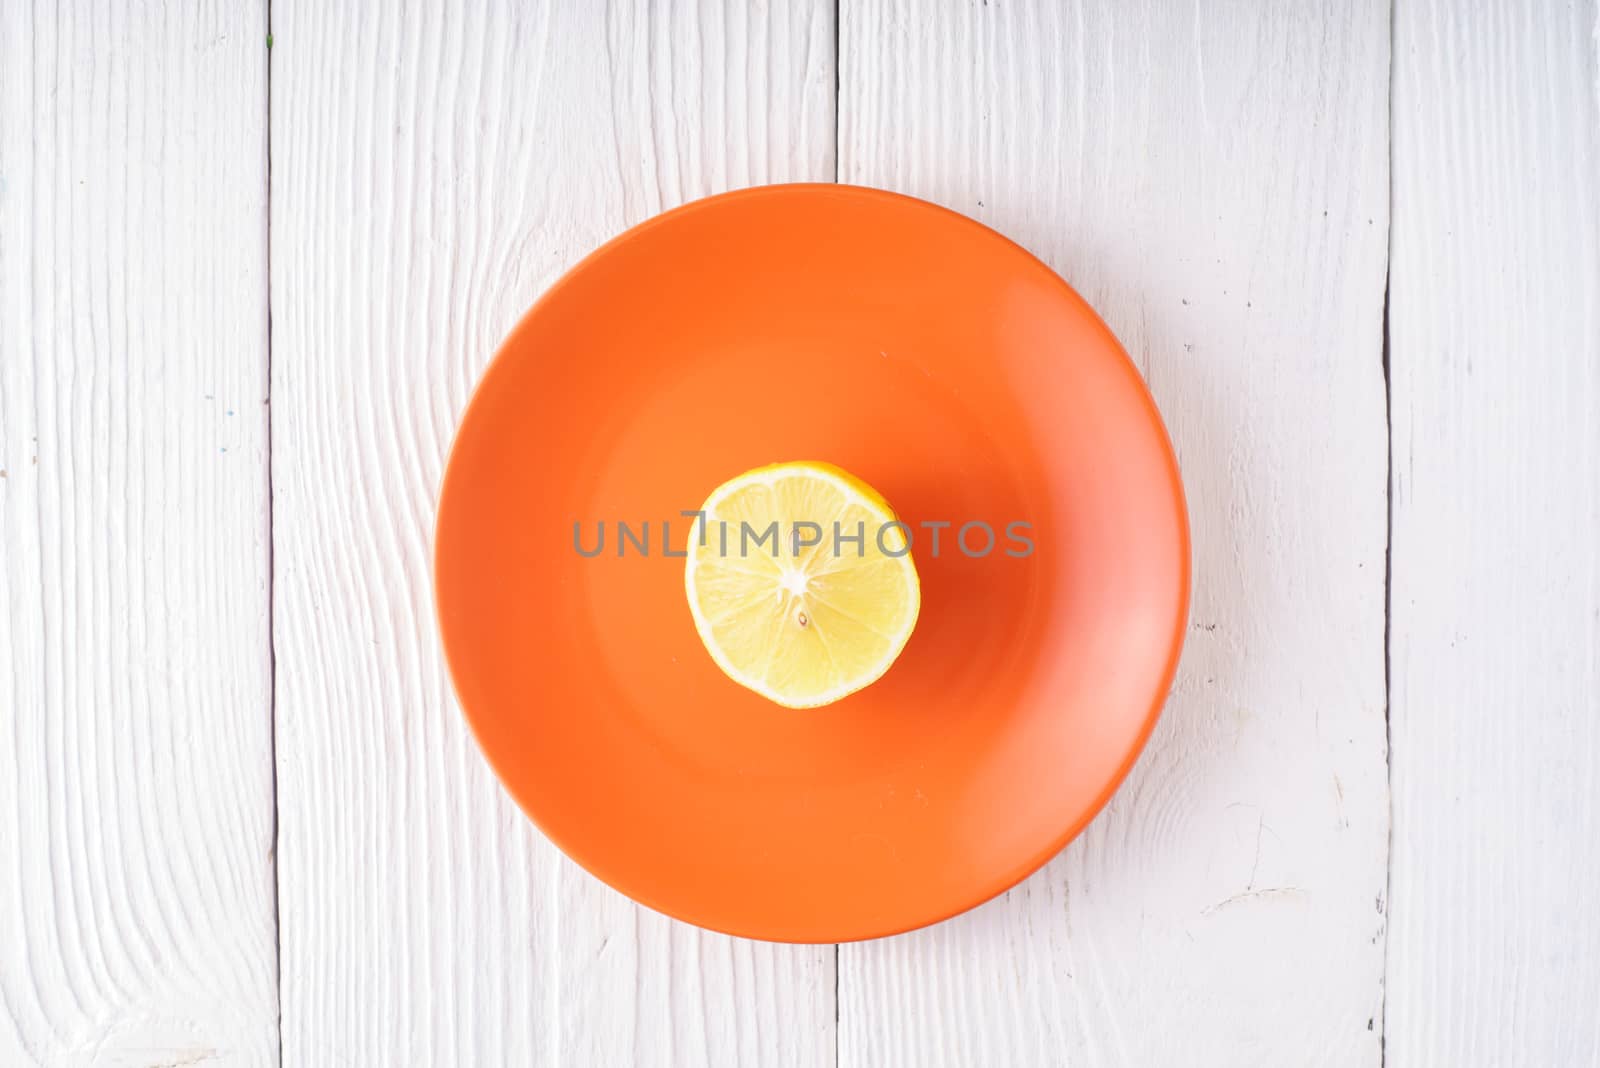 Half of lemon on orange plate by Deniskarpenkov